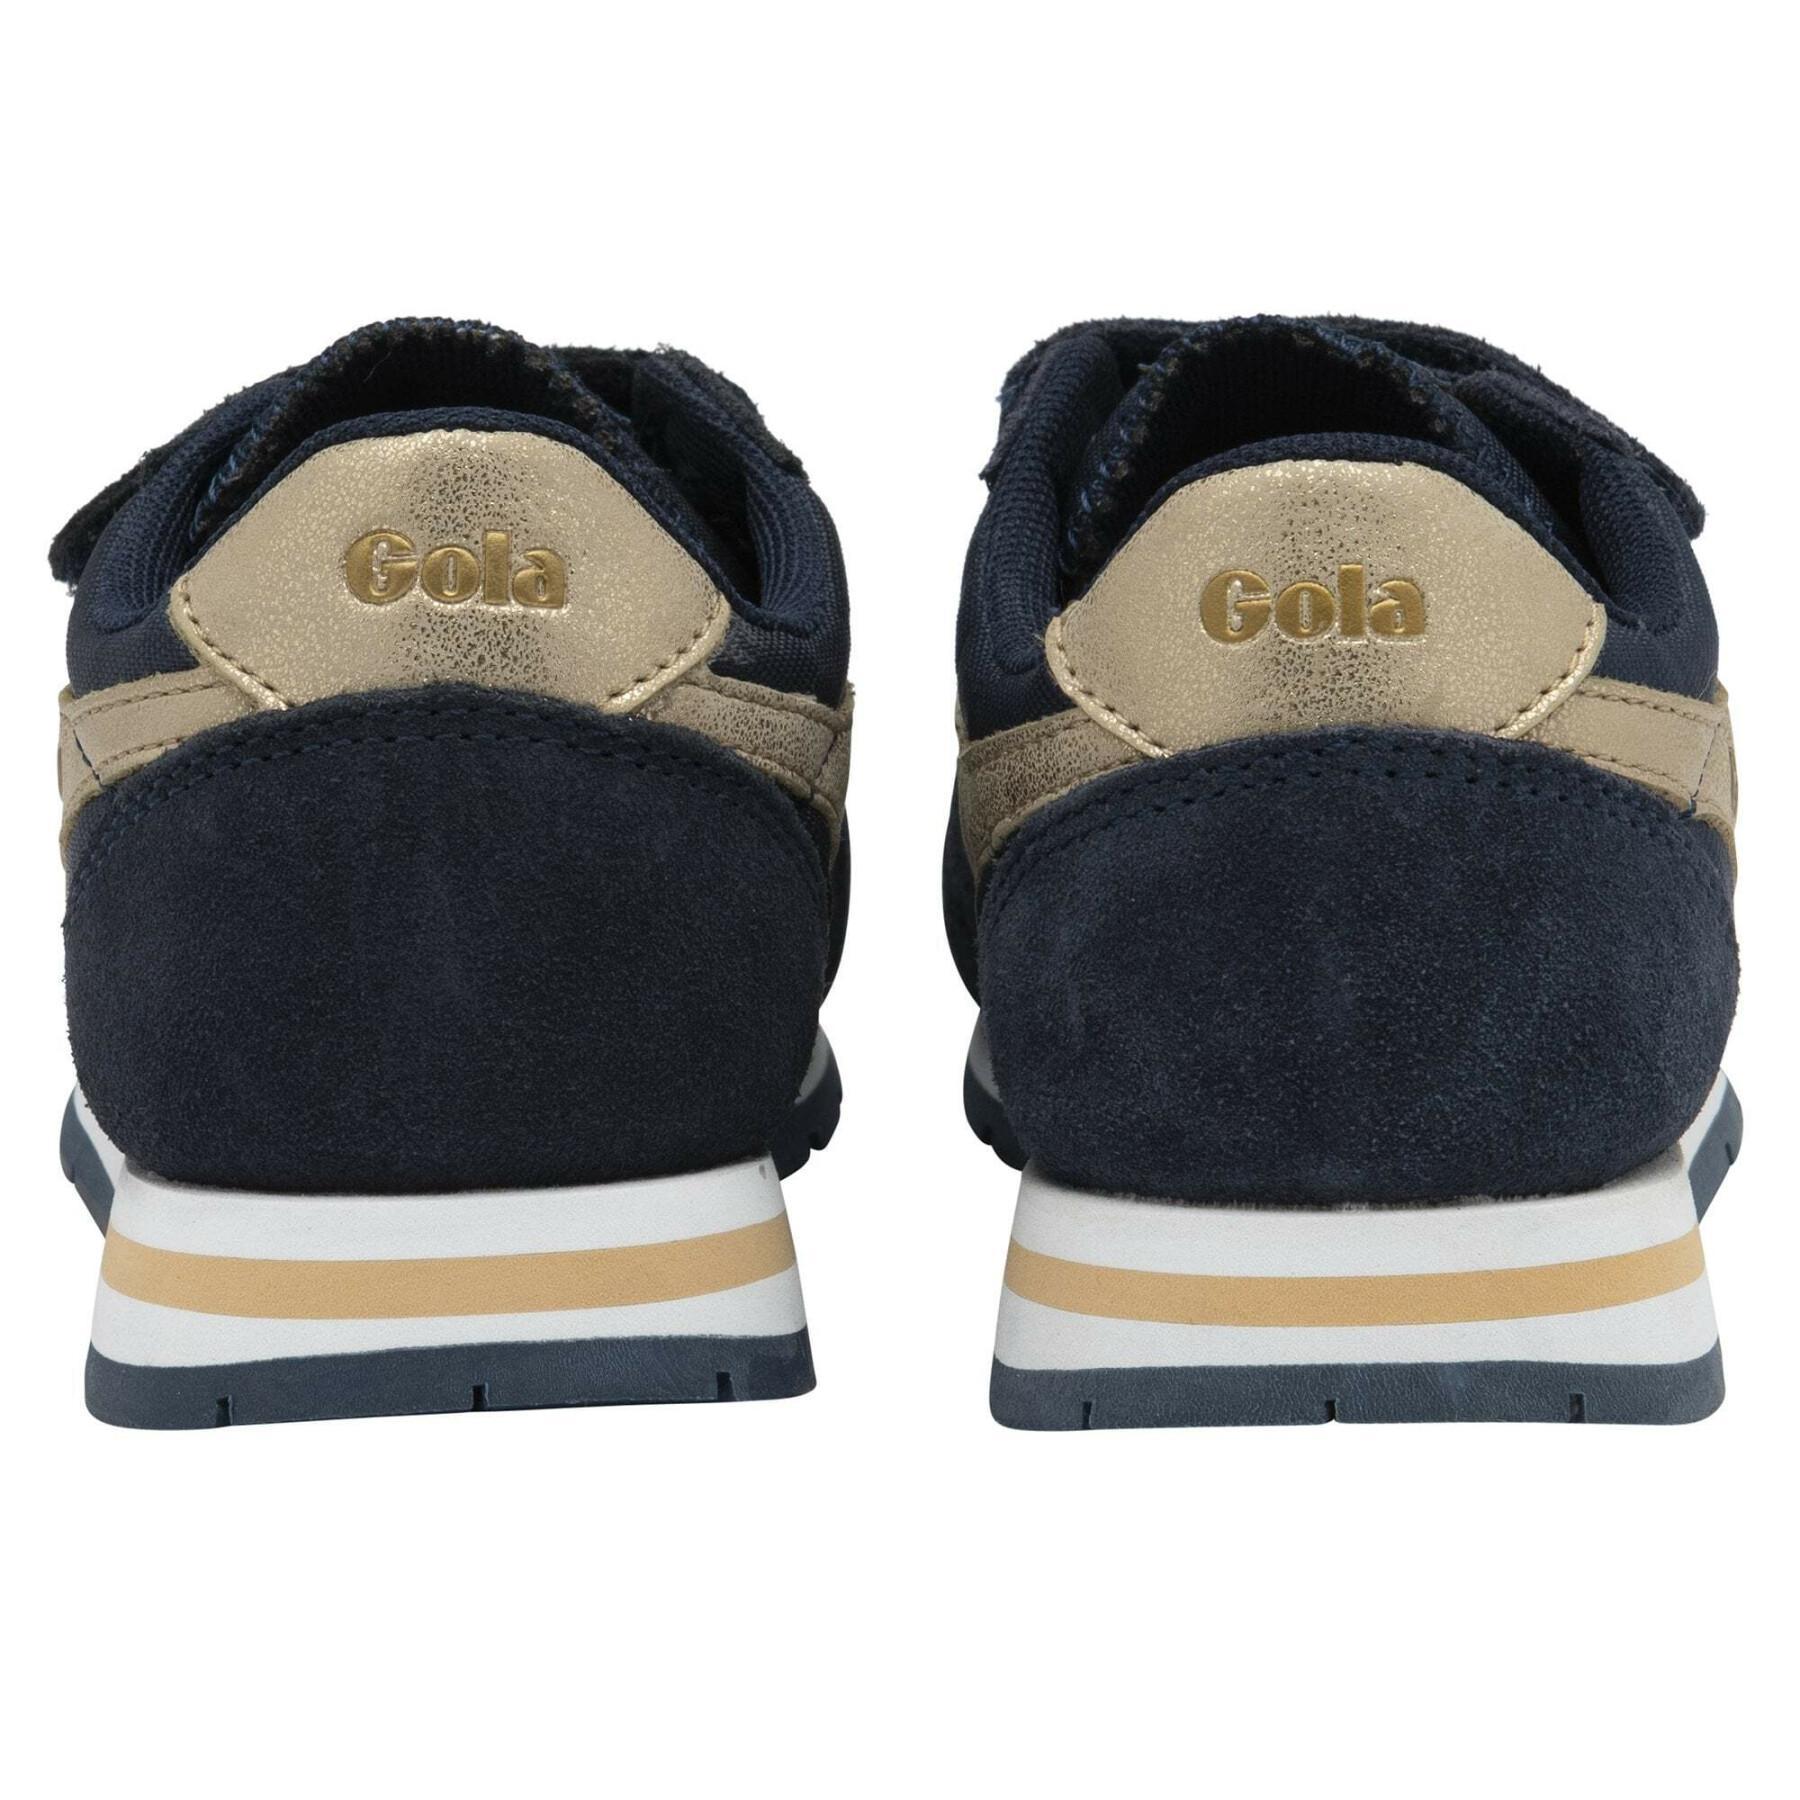 Girl sneakers Gola Classics Daytona Mirror Strap Trainers